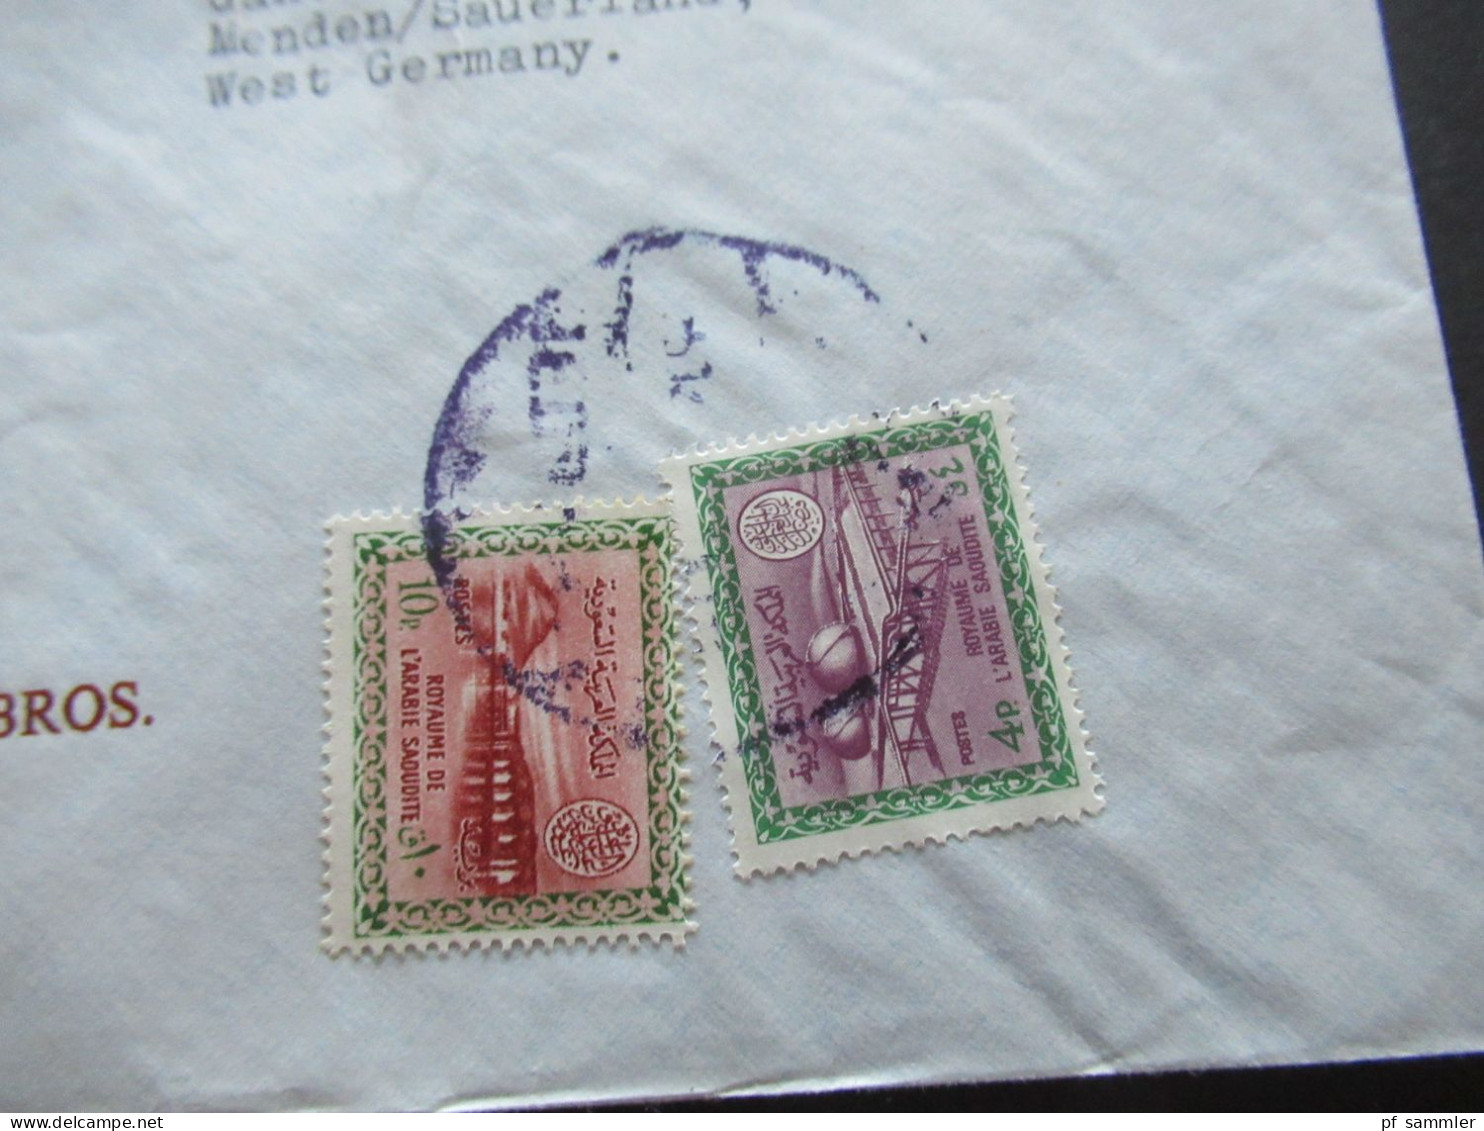 Asien Saudi Arabia um 1965 4x Firmenumschläge Jeddah Saudi Electric und E.A. Juffali Bros. Air Mail / Luftpost